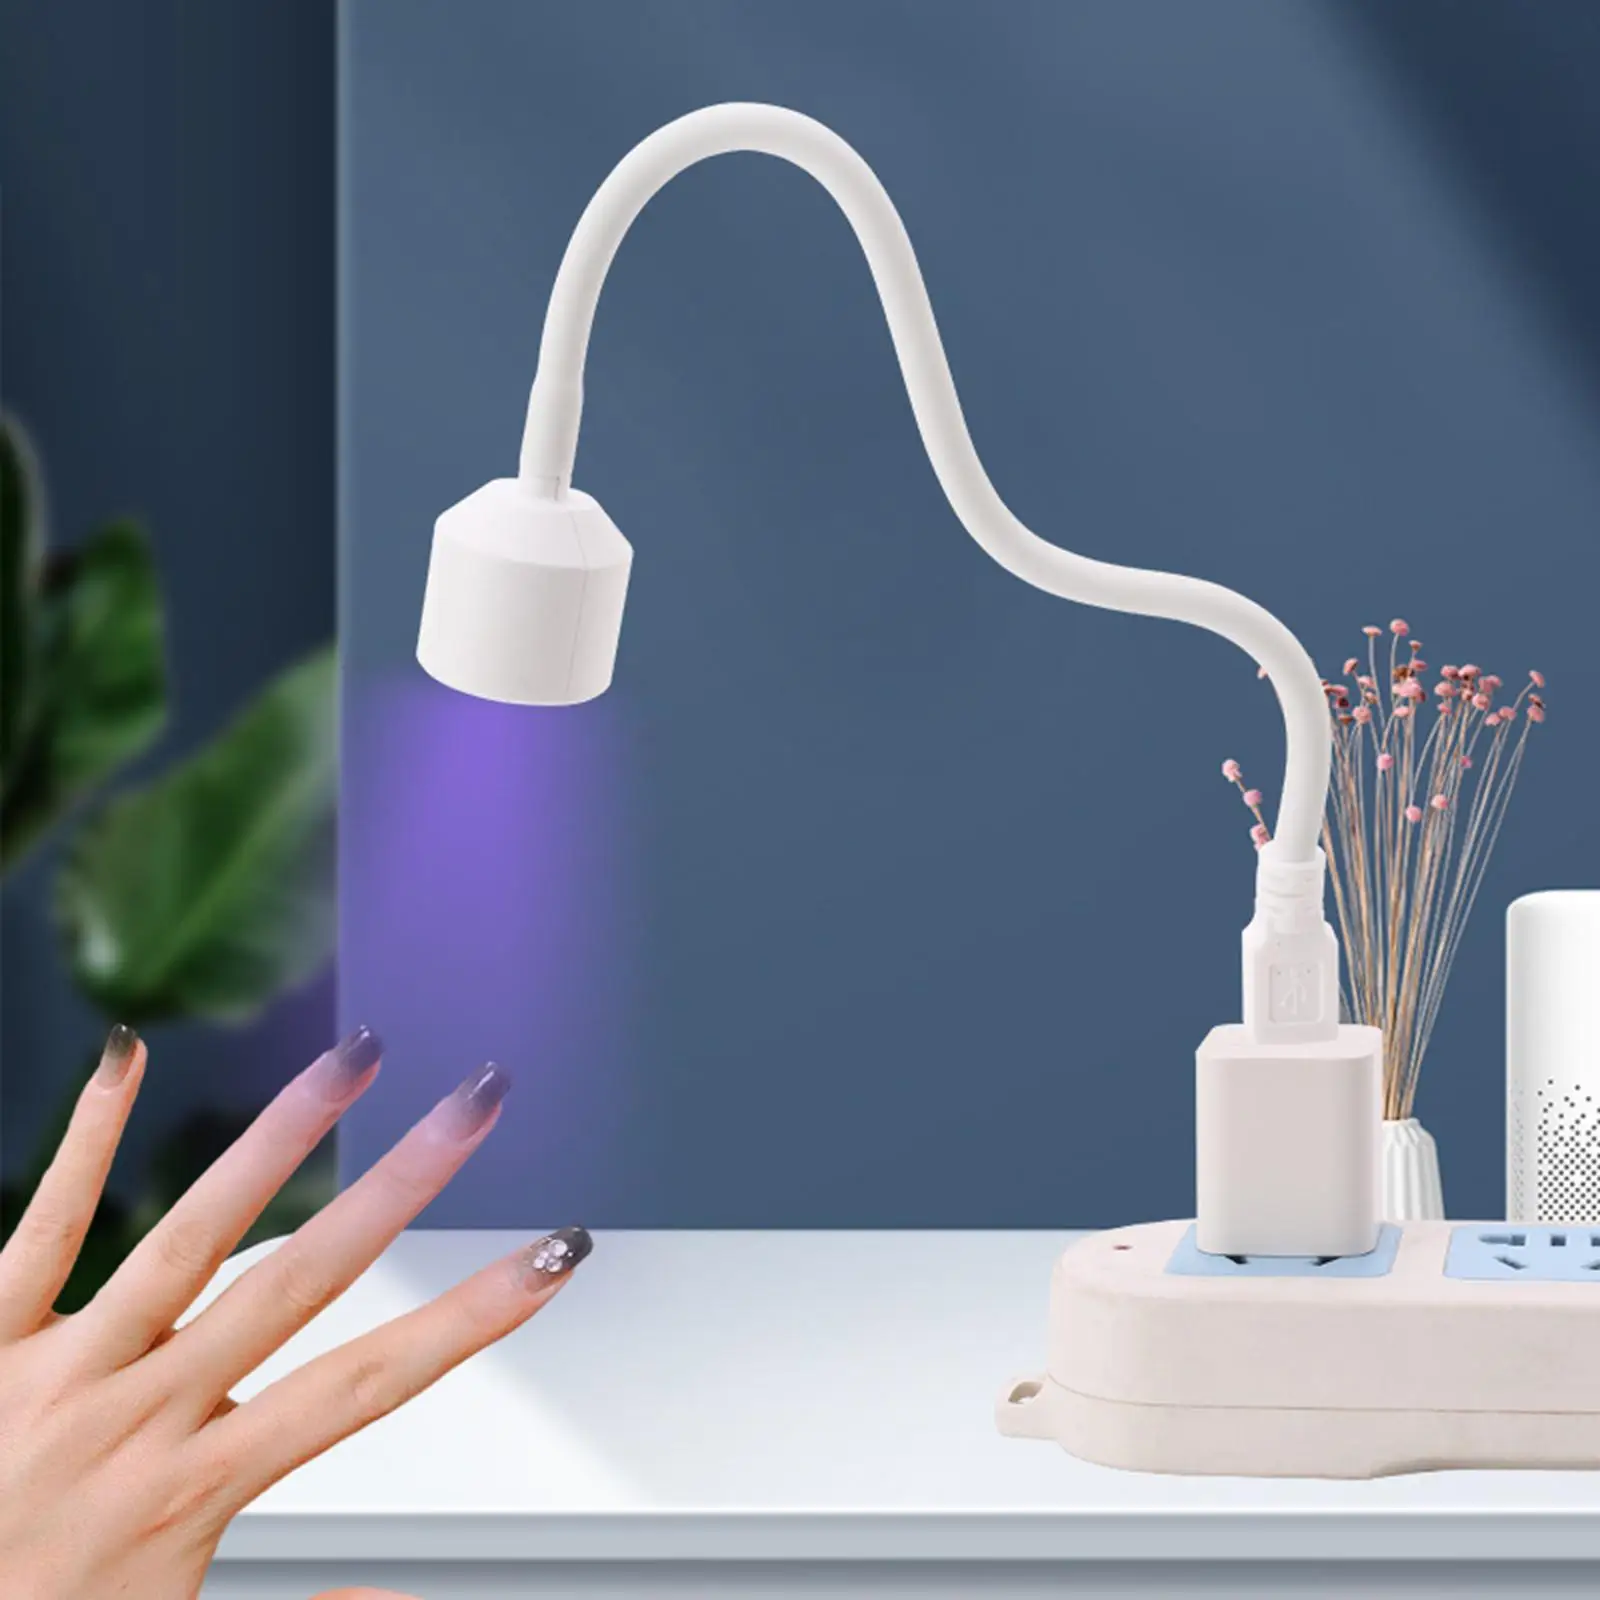 6W USB Nail Baking Lamp LED Portable for Nail Gel Polish DIY Single Finger Nail Art Tool For Gel Polish Manicure Equipment